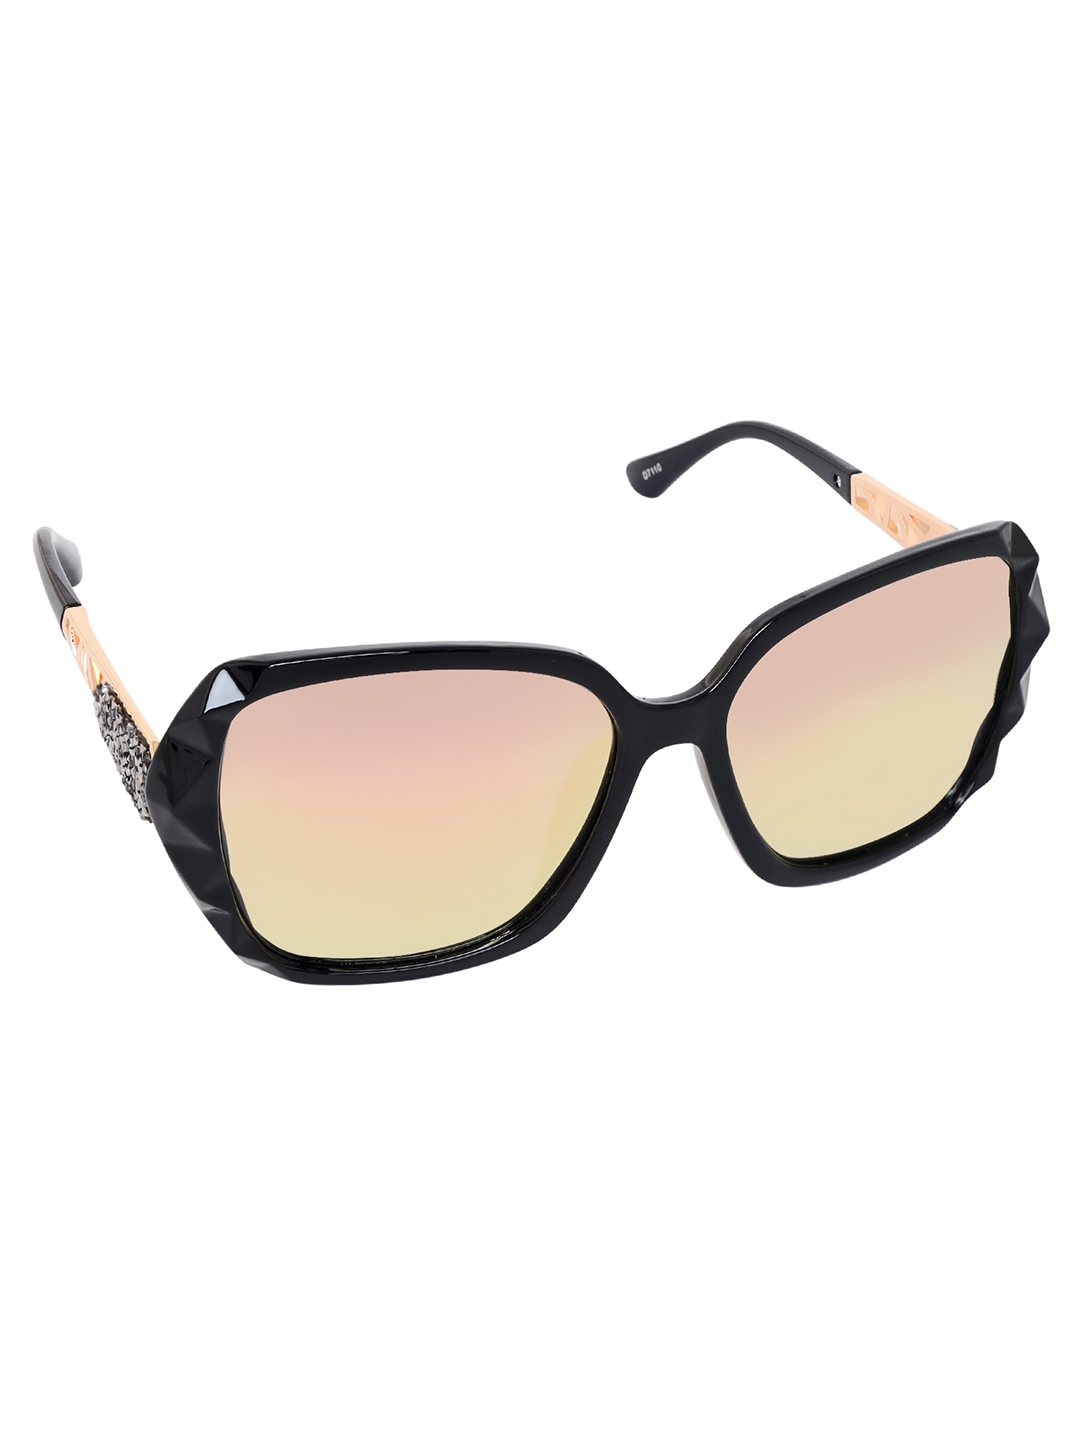 Aeropostale | Aeropostale AERO_SUN_2538_C5 Summer Sun Glasses with UV protection Polarized Anti Glare Summer Style Golden Reflective Lenses with Black wide Acrylic Frame 1